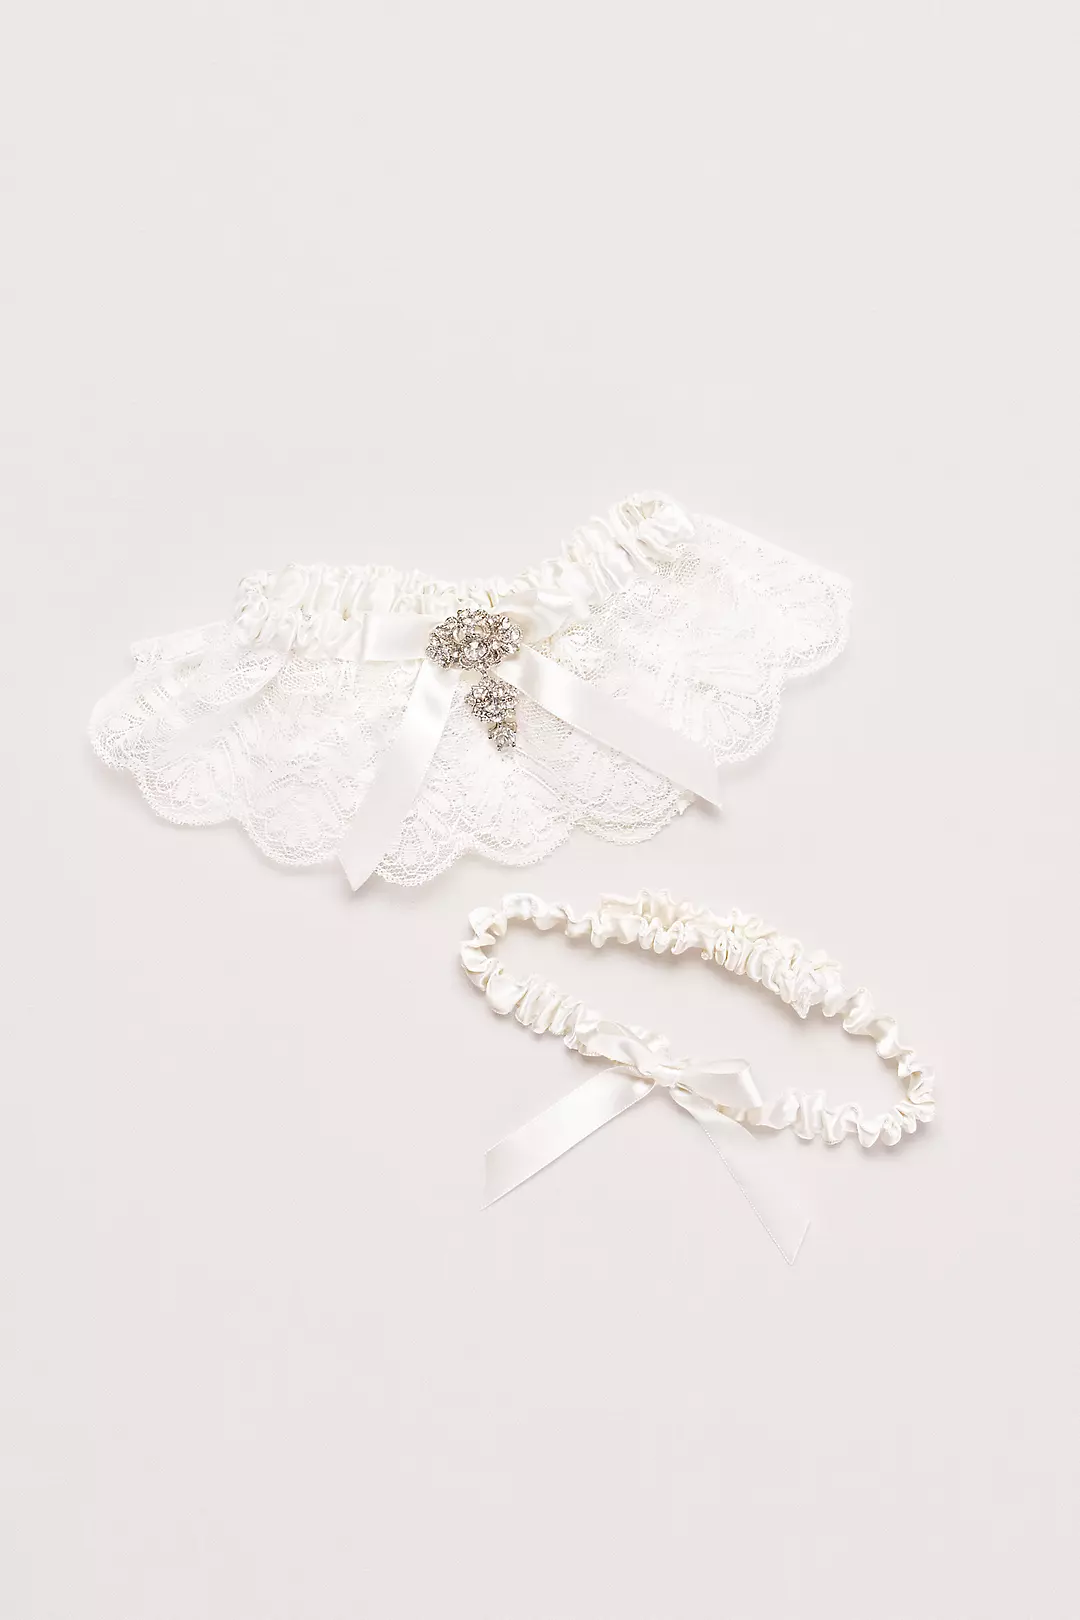 Adjustable Jeweled Lace Garter Set Image